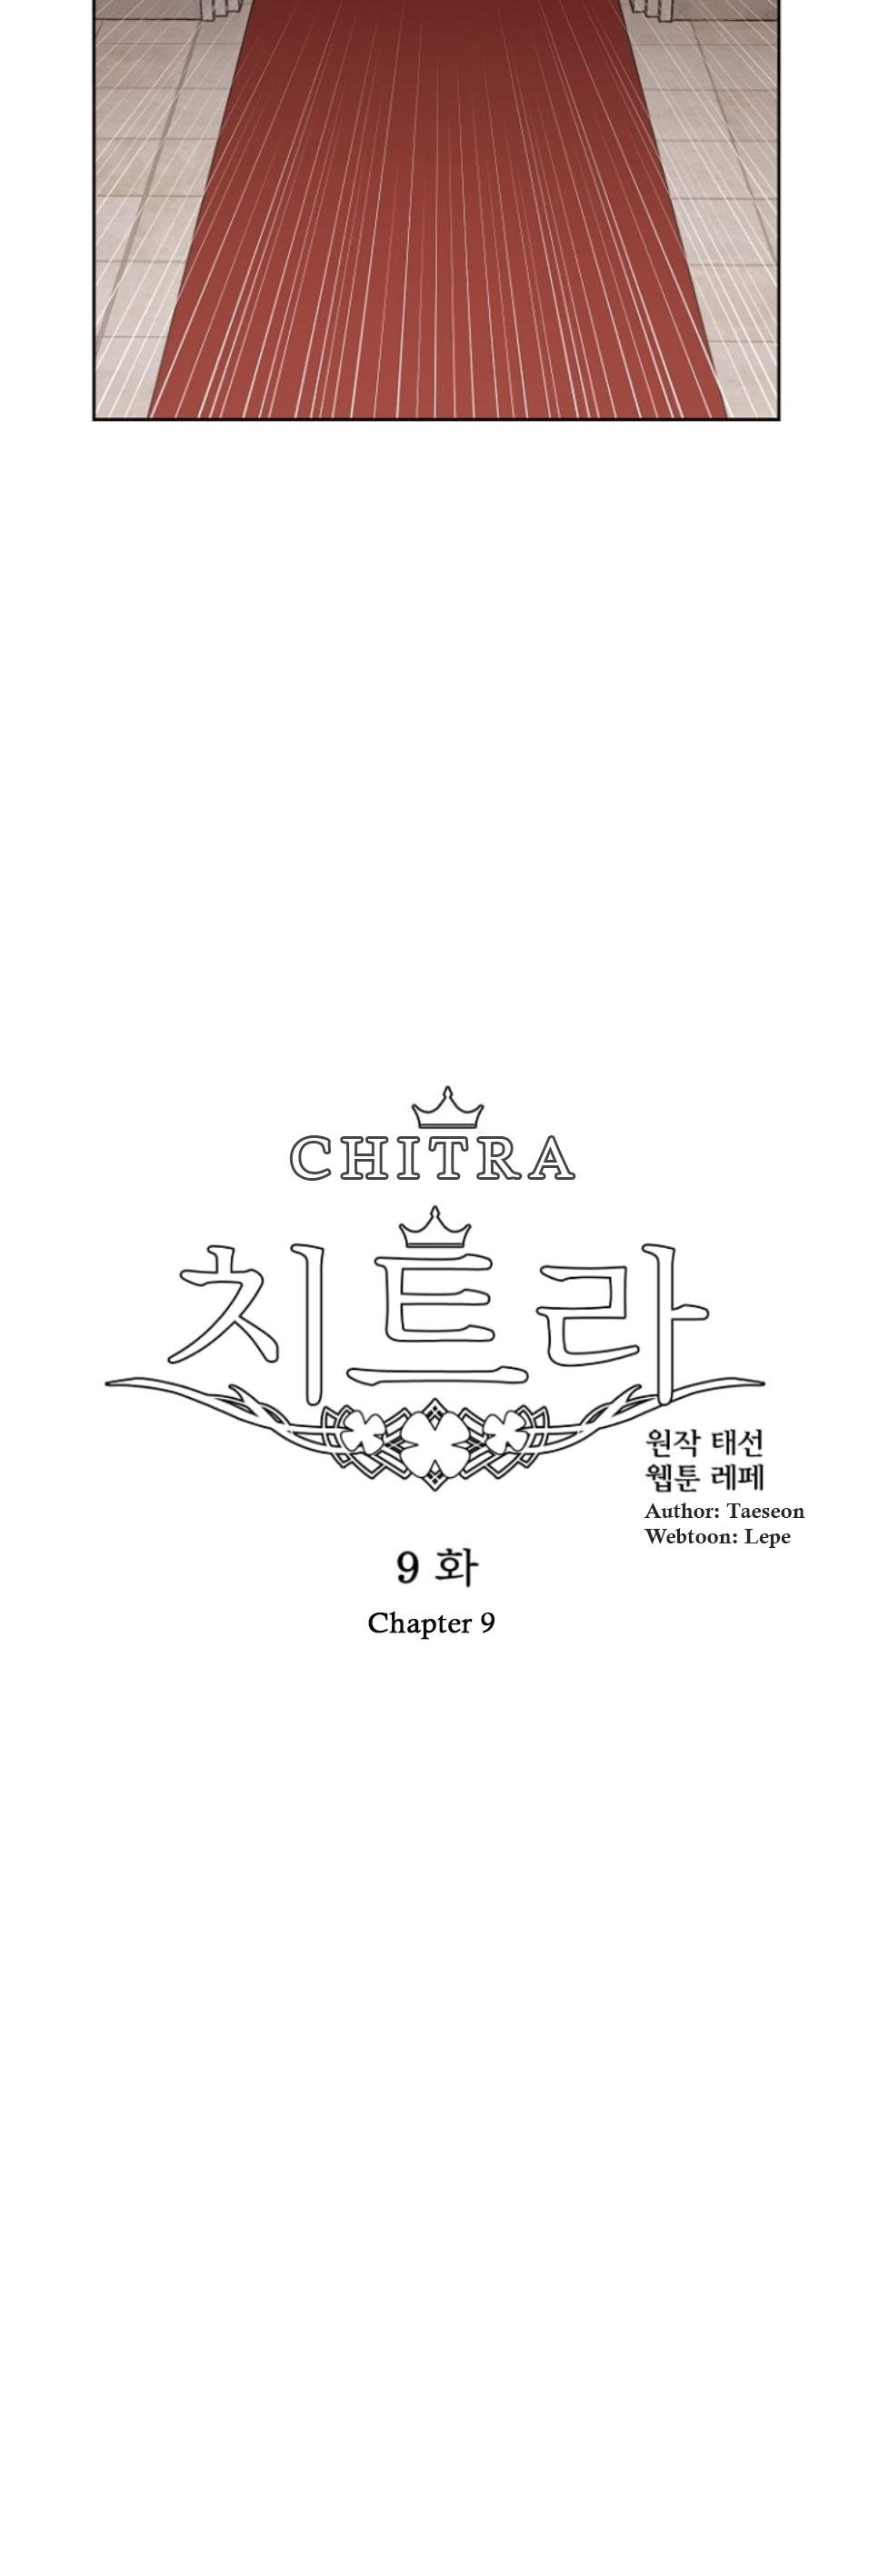 Chitra chapter 9